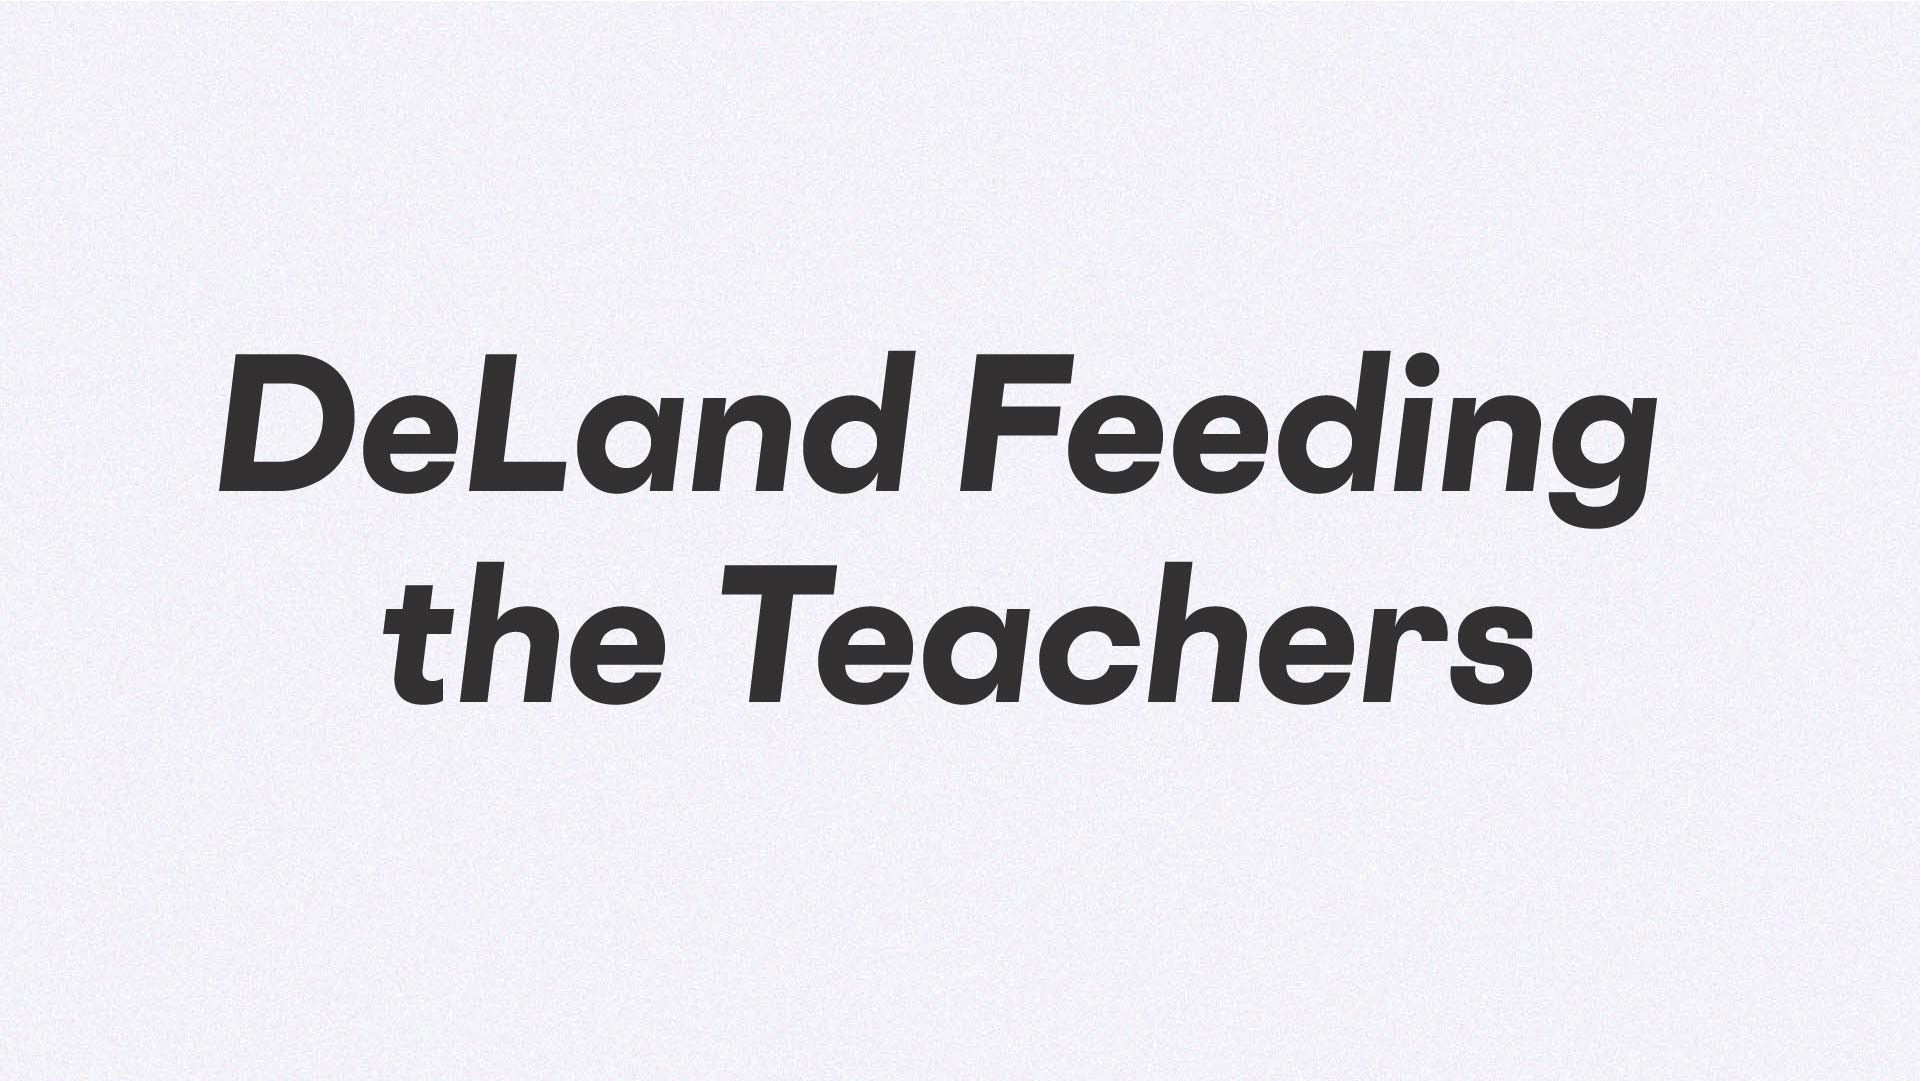 DeLand Feeding the Teachers